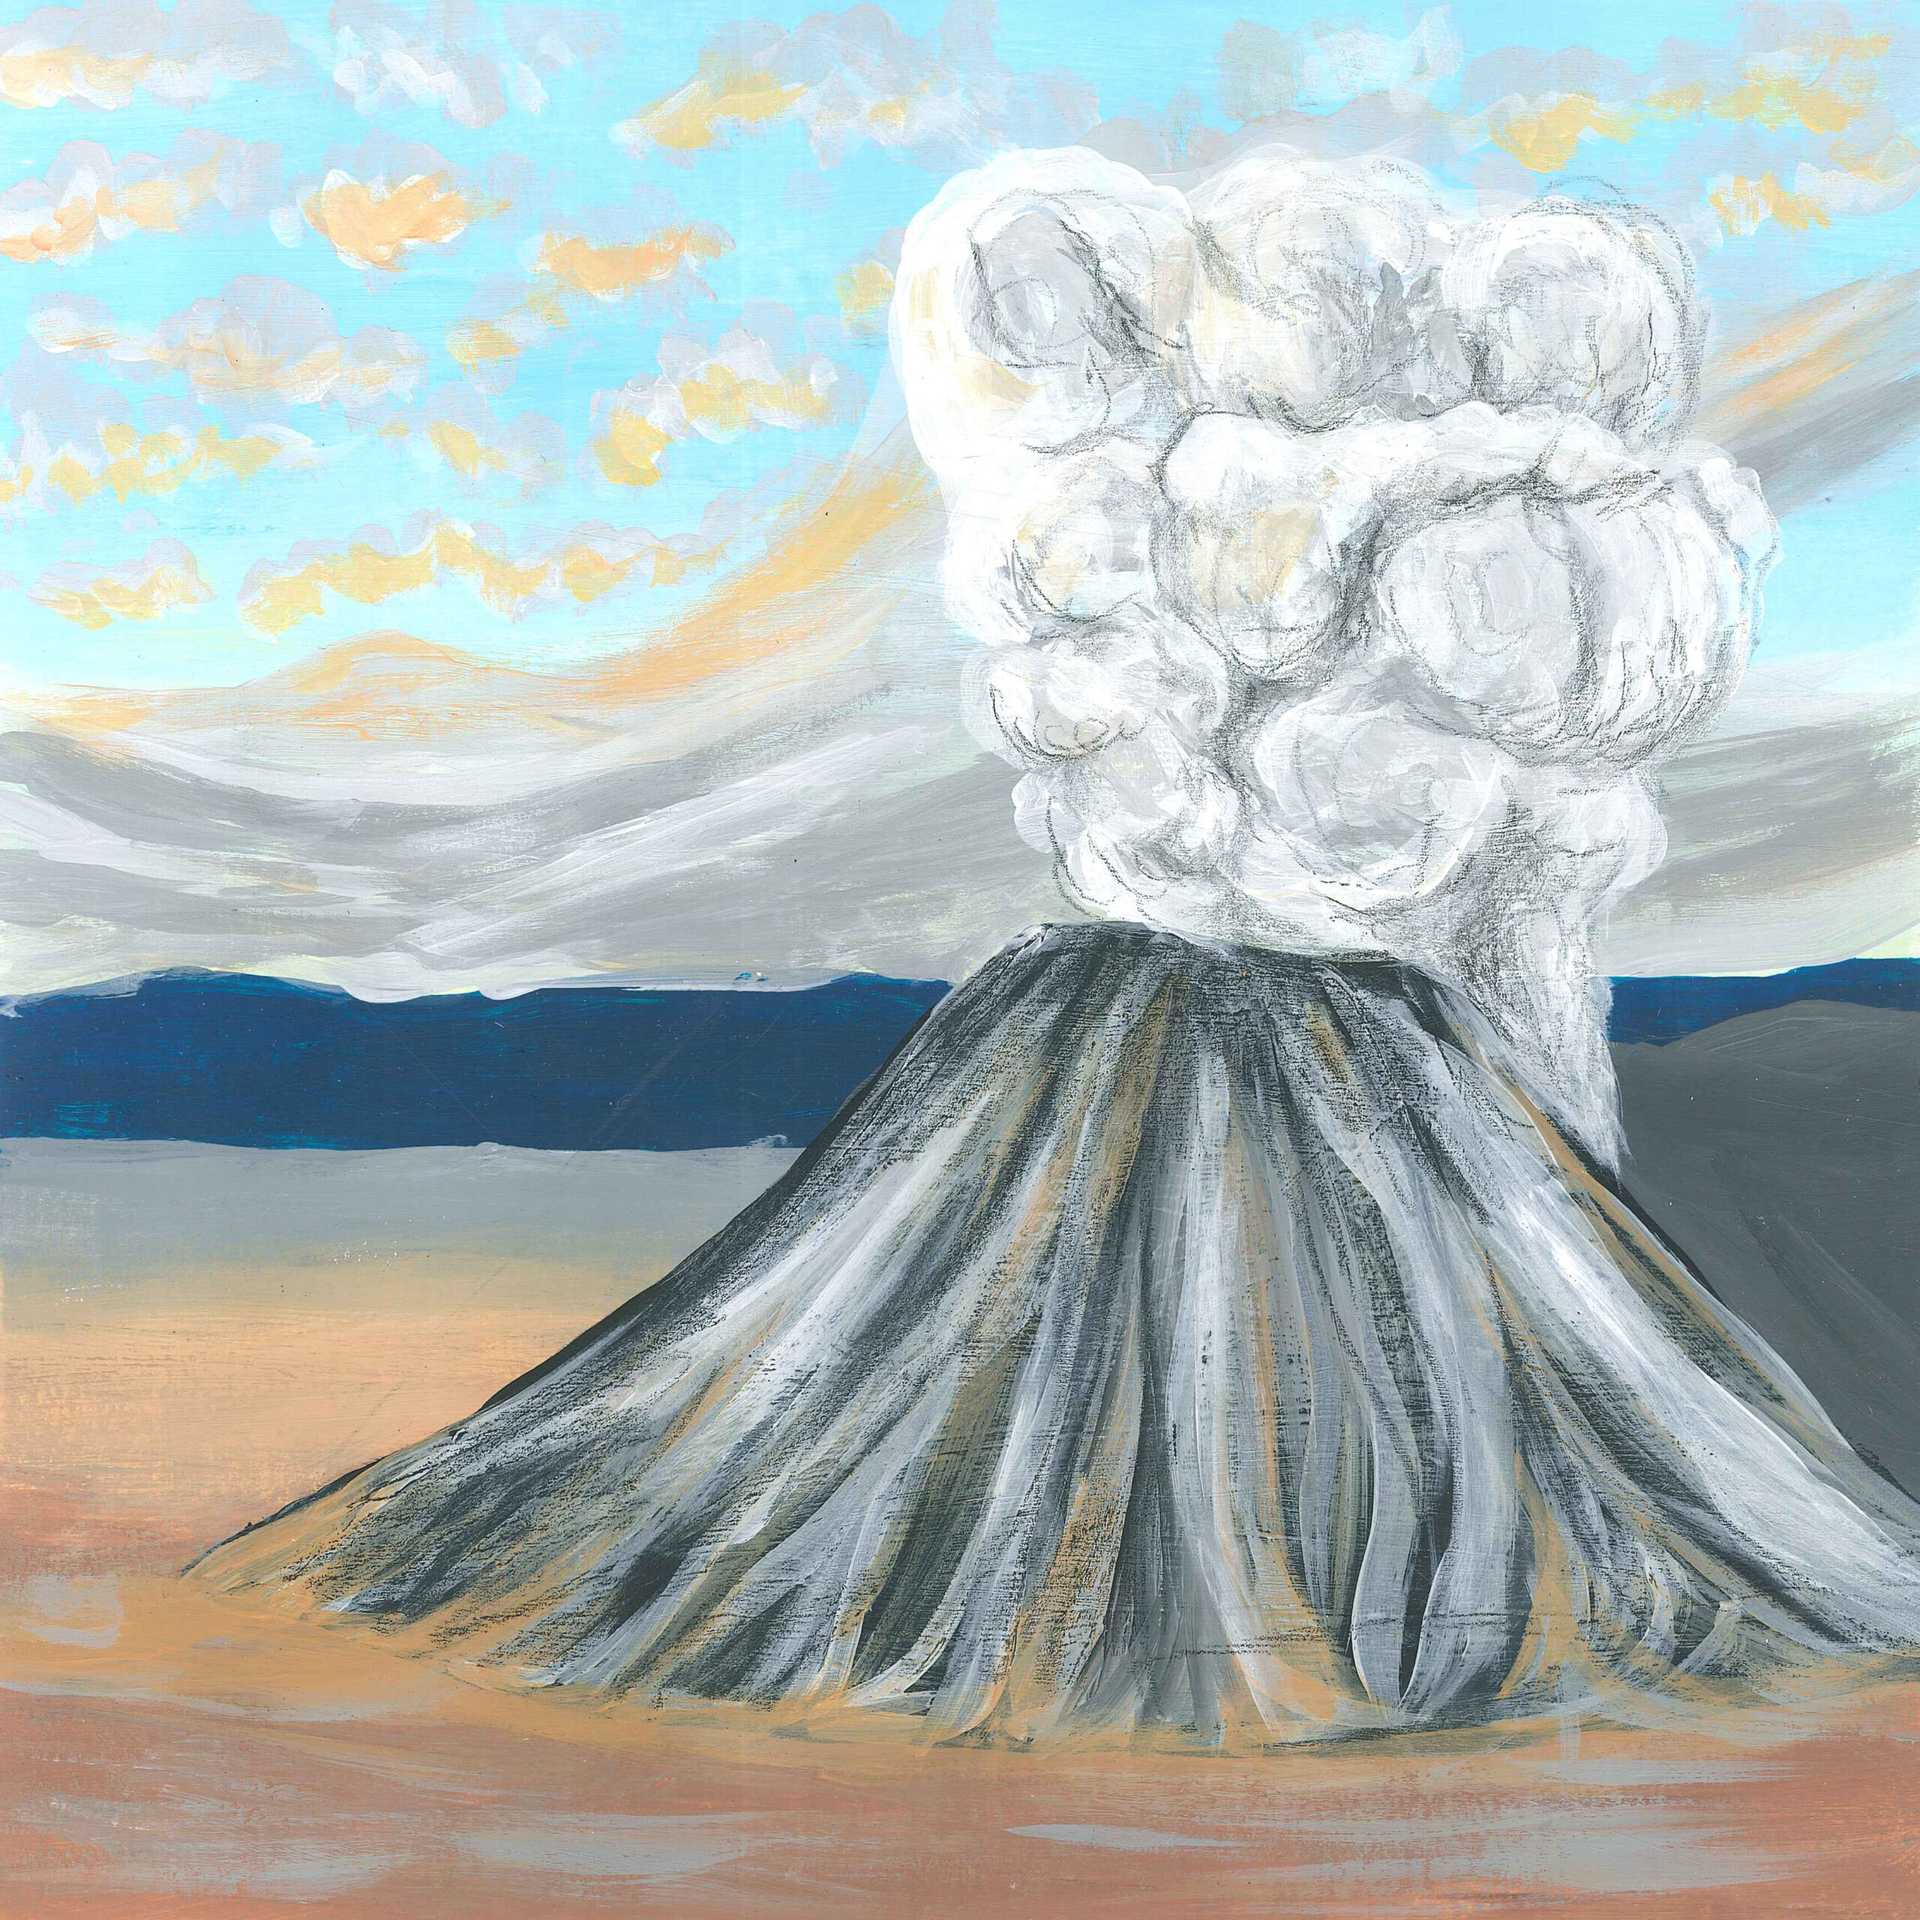 An Active Volcano - nature soundscape - earth.fm